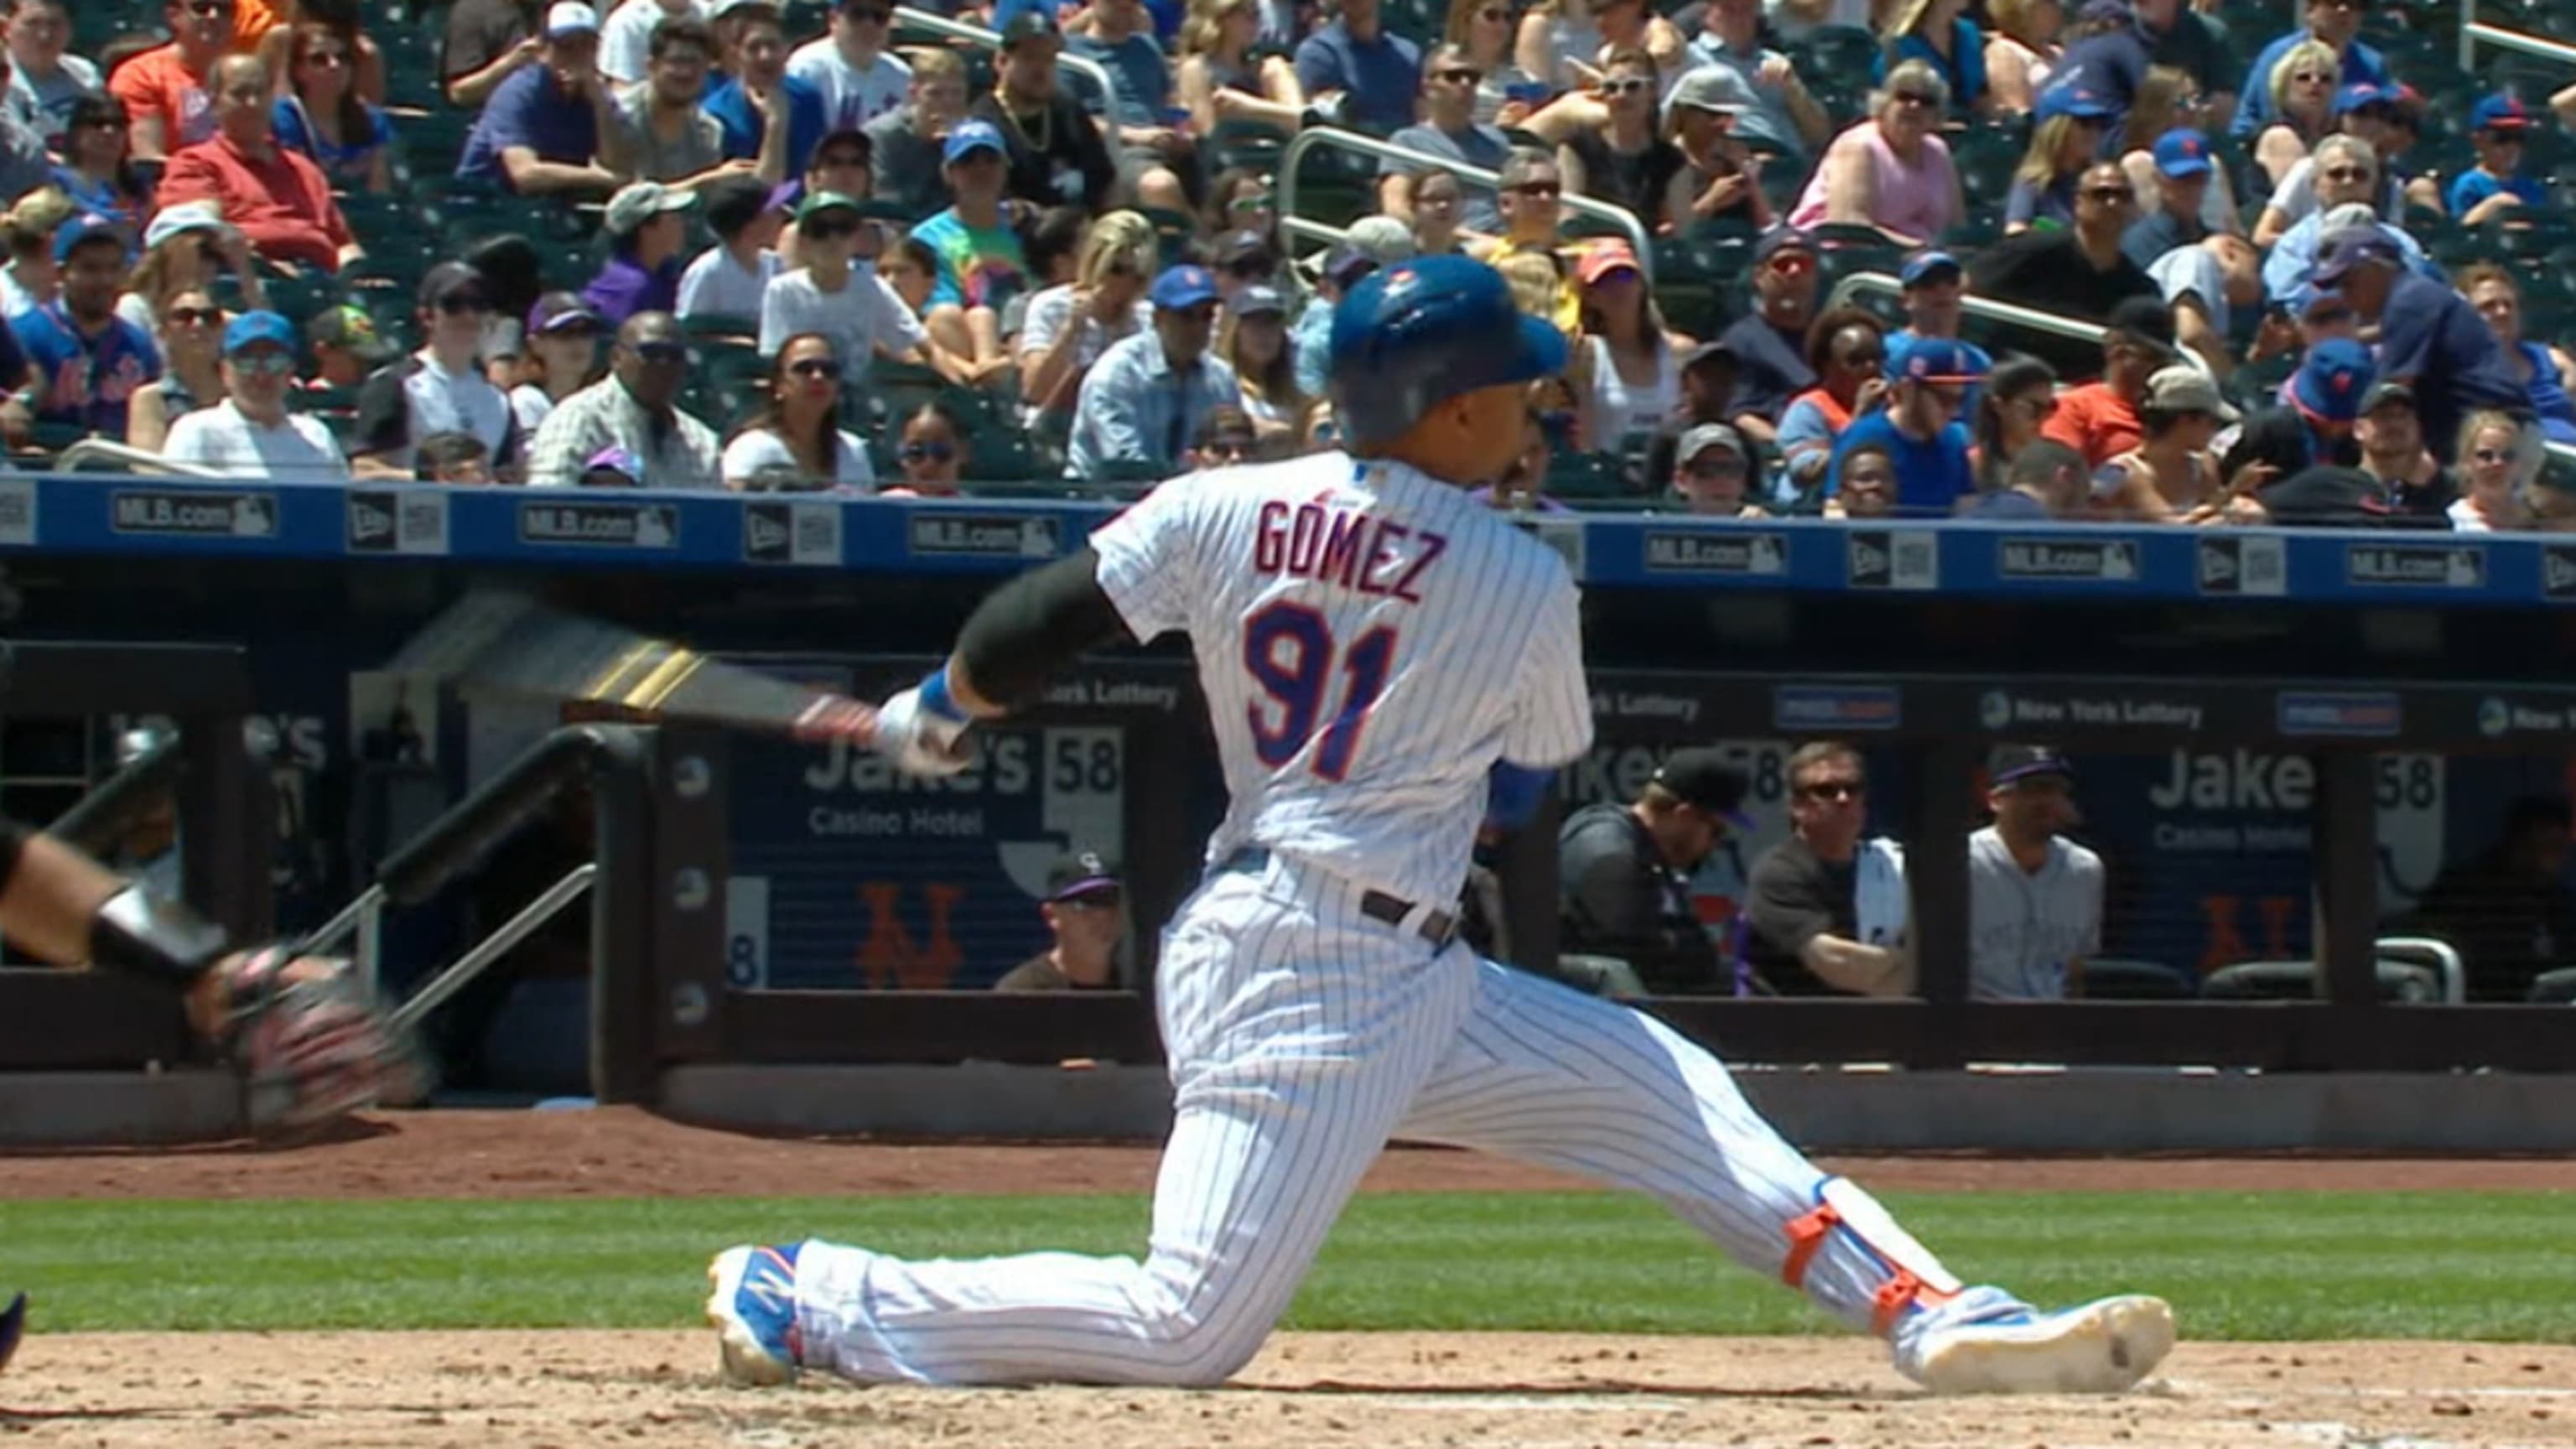 Mets call up Carlos Gomez - NBC Sports